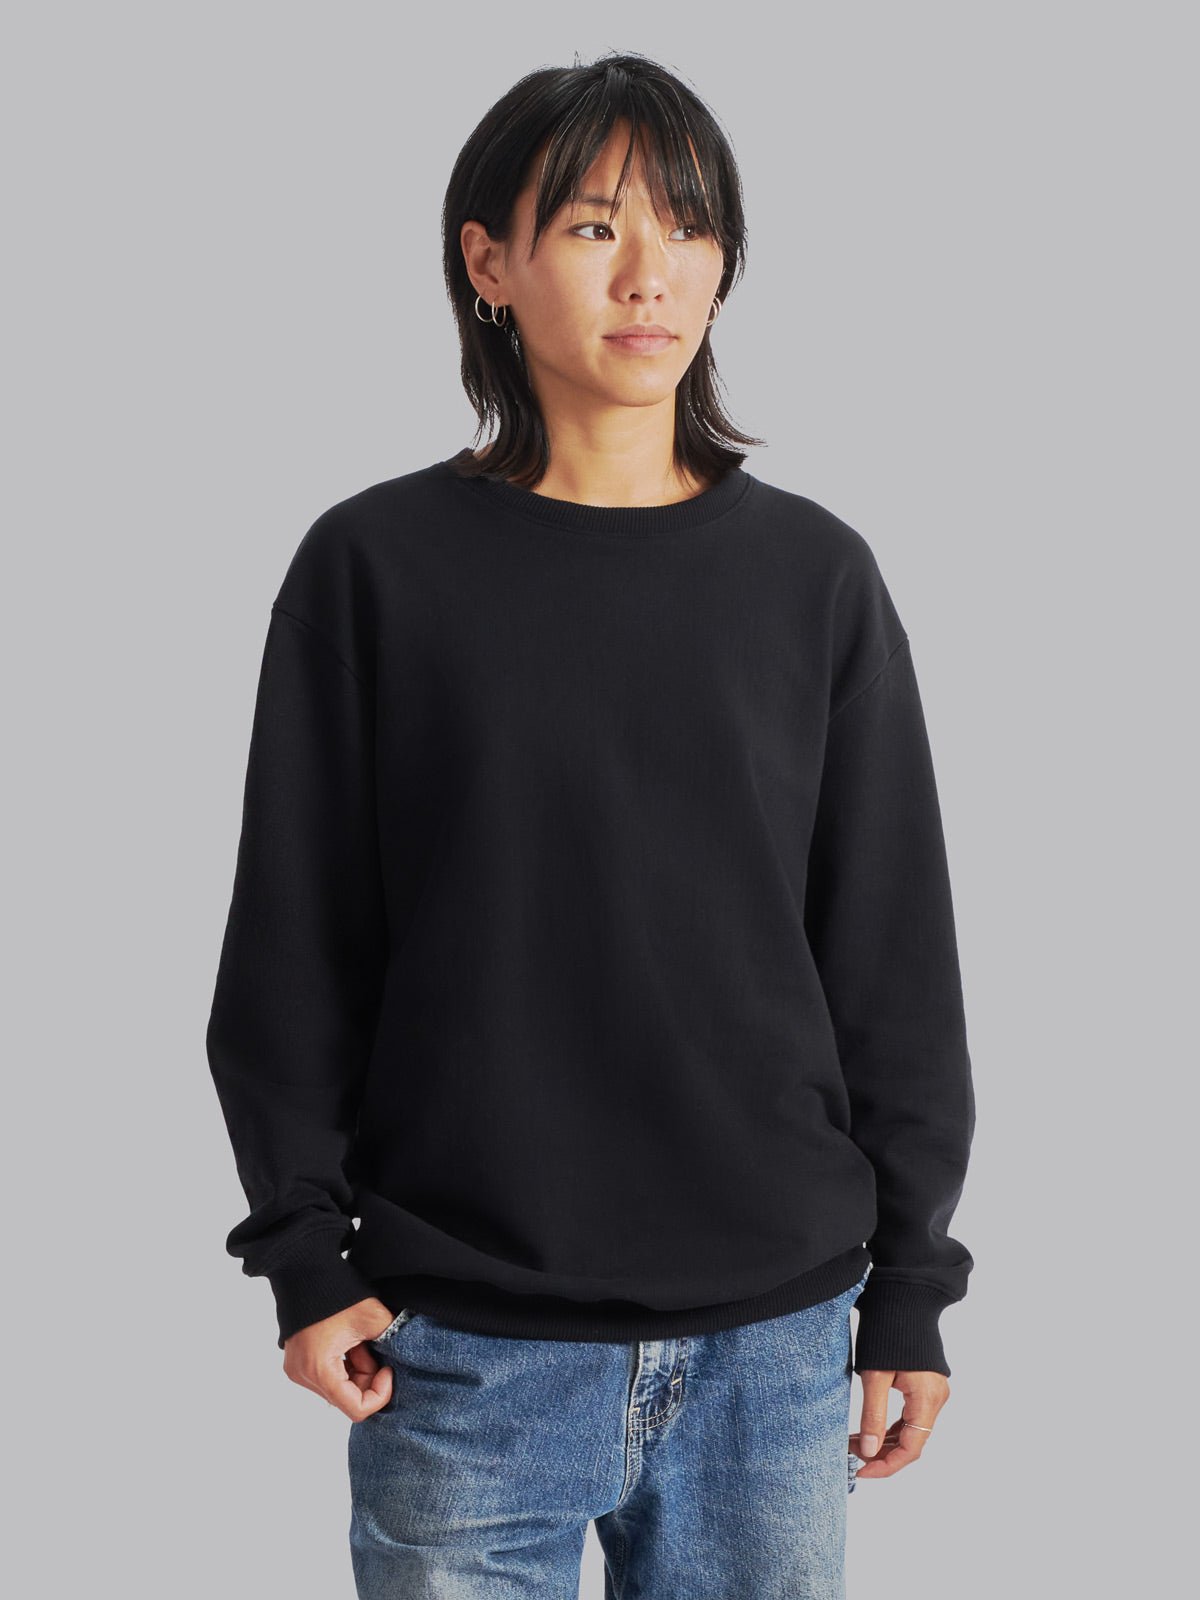 100% Recycled Cotton ♻️ Unisex Crew Sweatshirt EV3001 - Everywhere Apparel - EVR3001-C-BLK-XS black